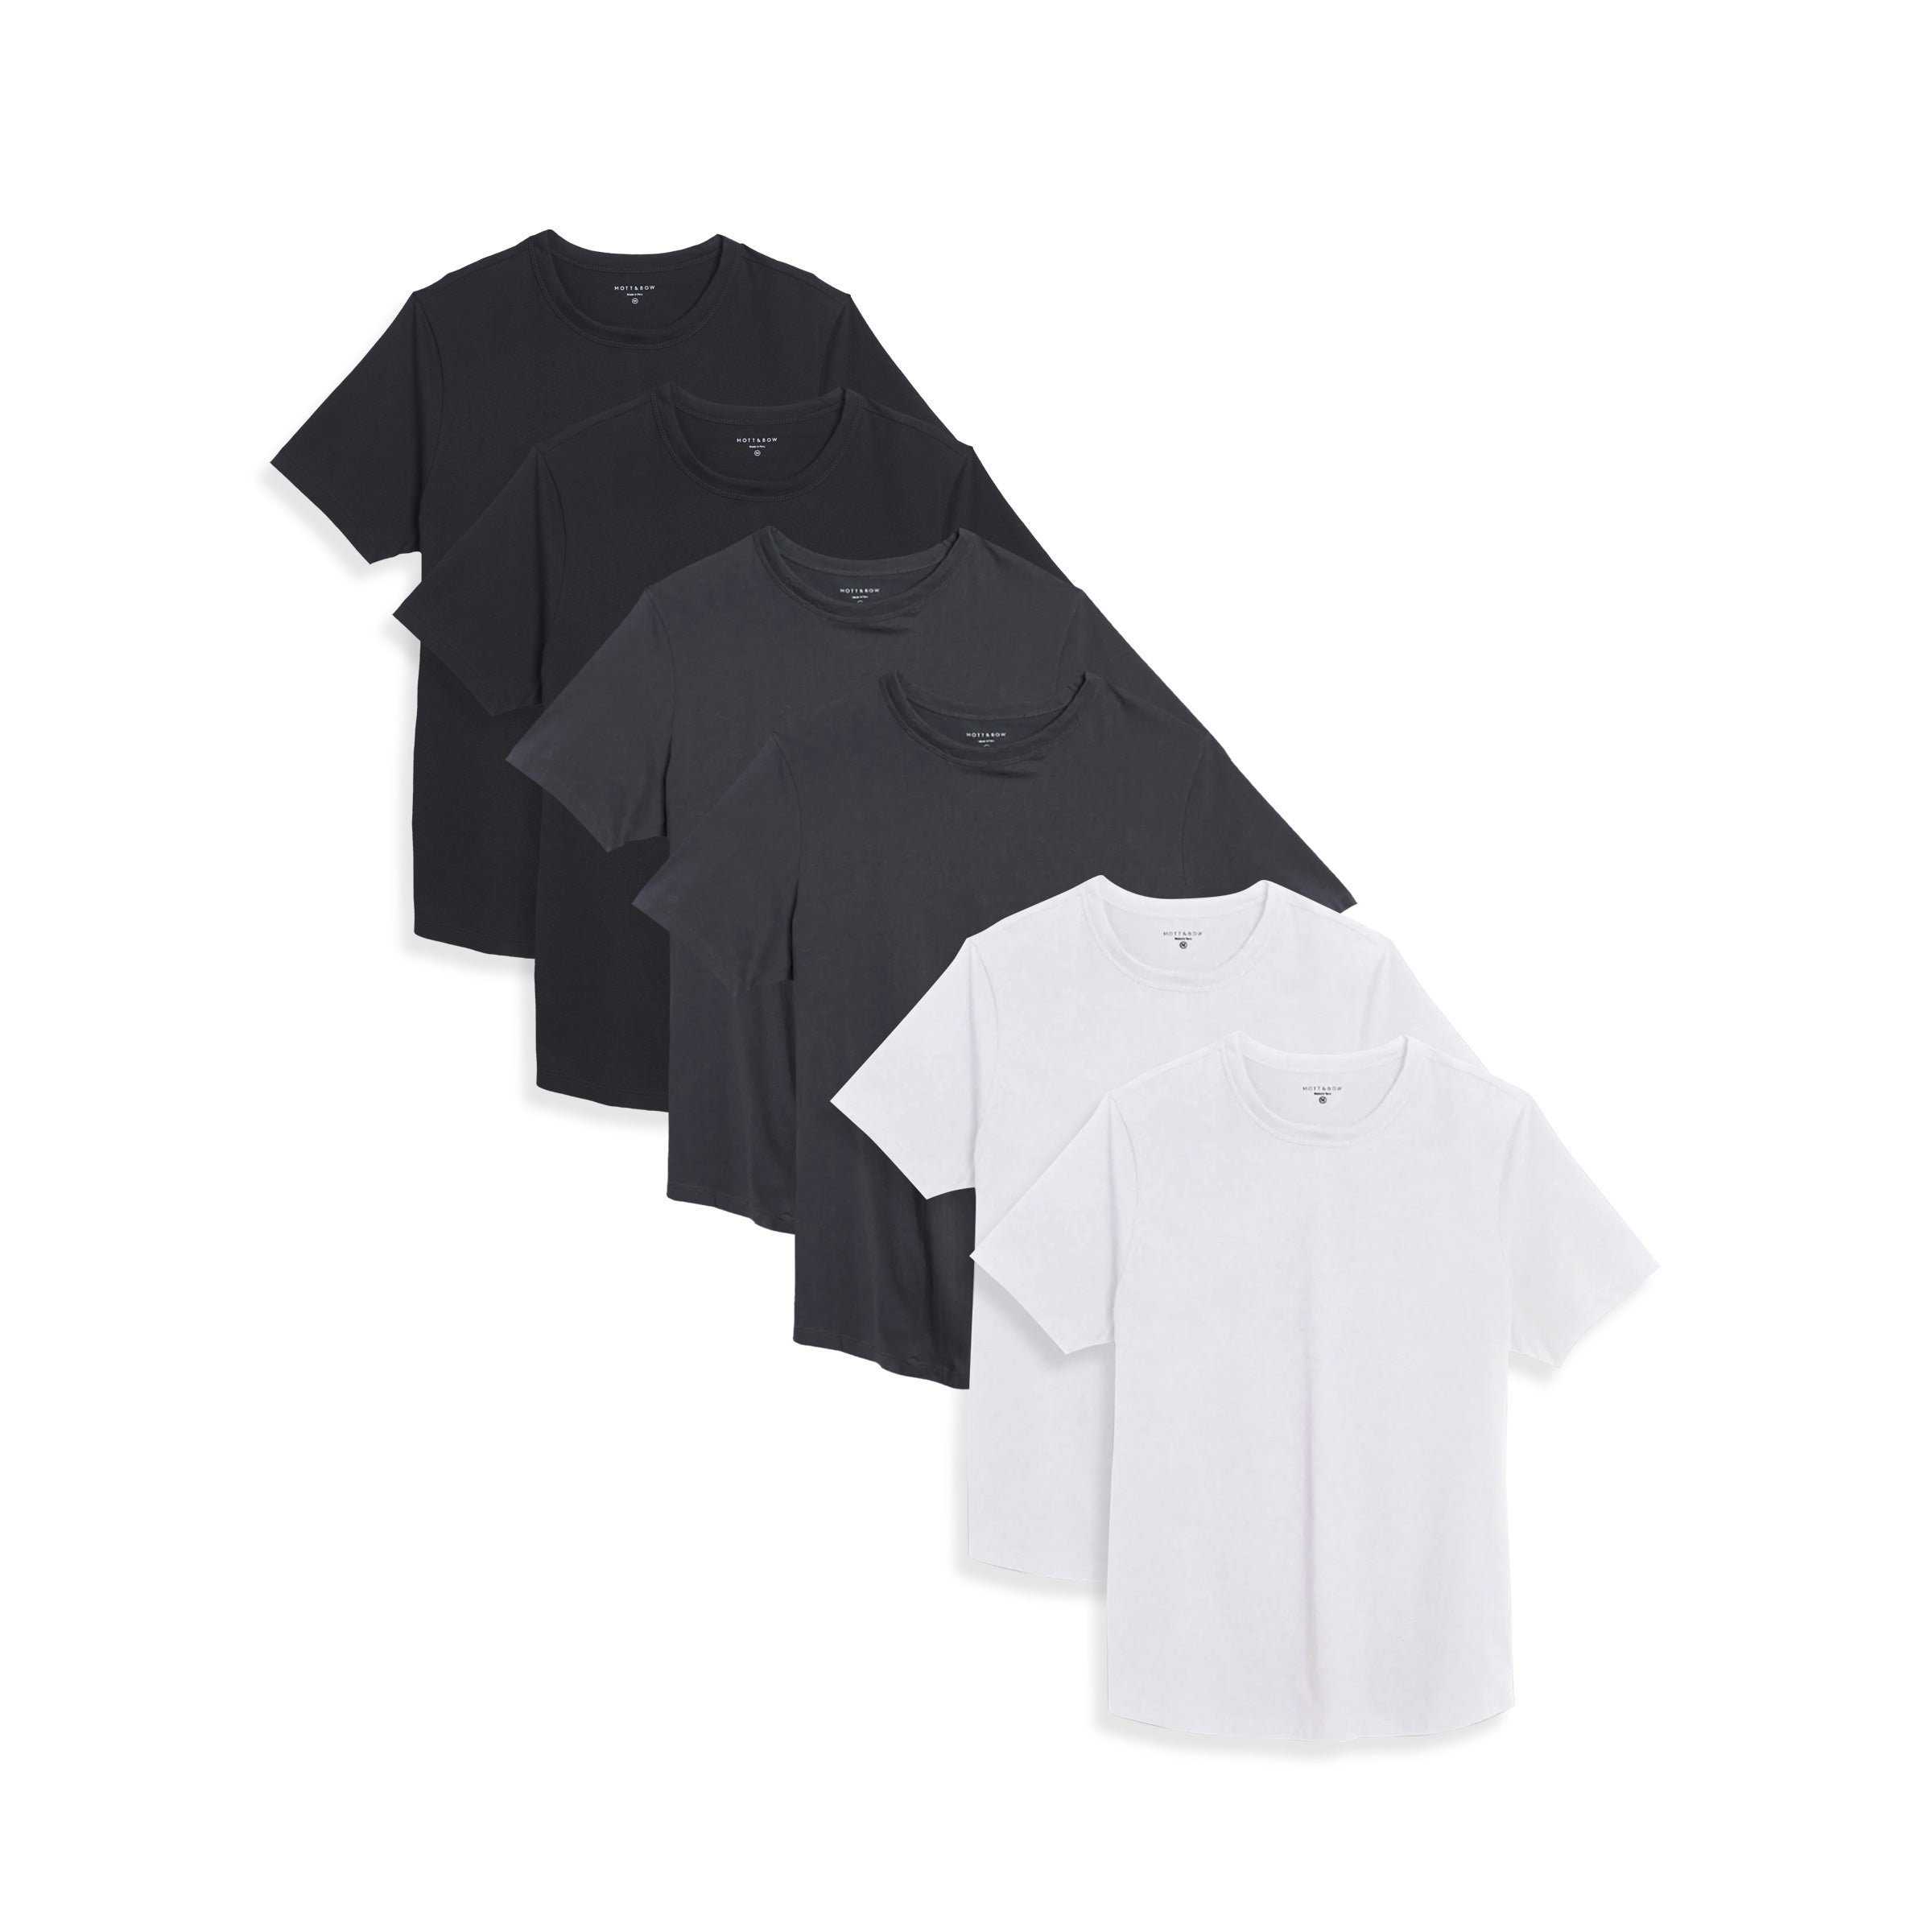 Men wearing Black/Dark Gray/White Curved Hem Driggs 6-Pack tees